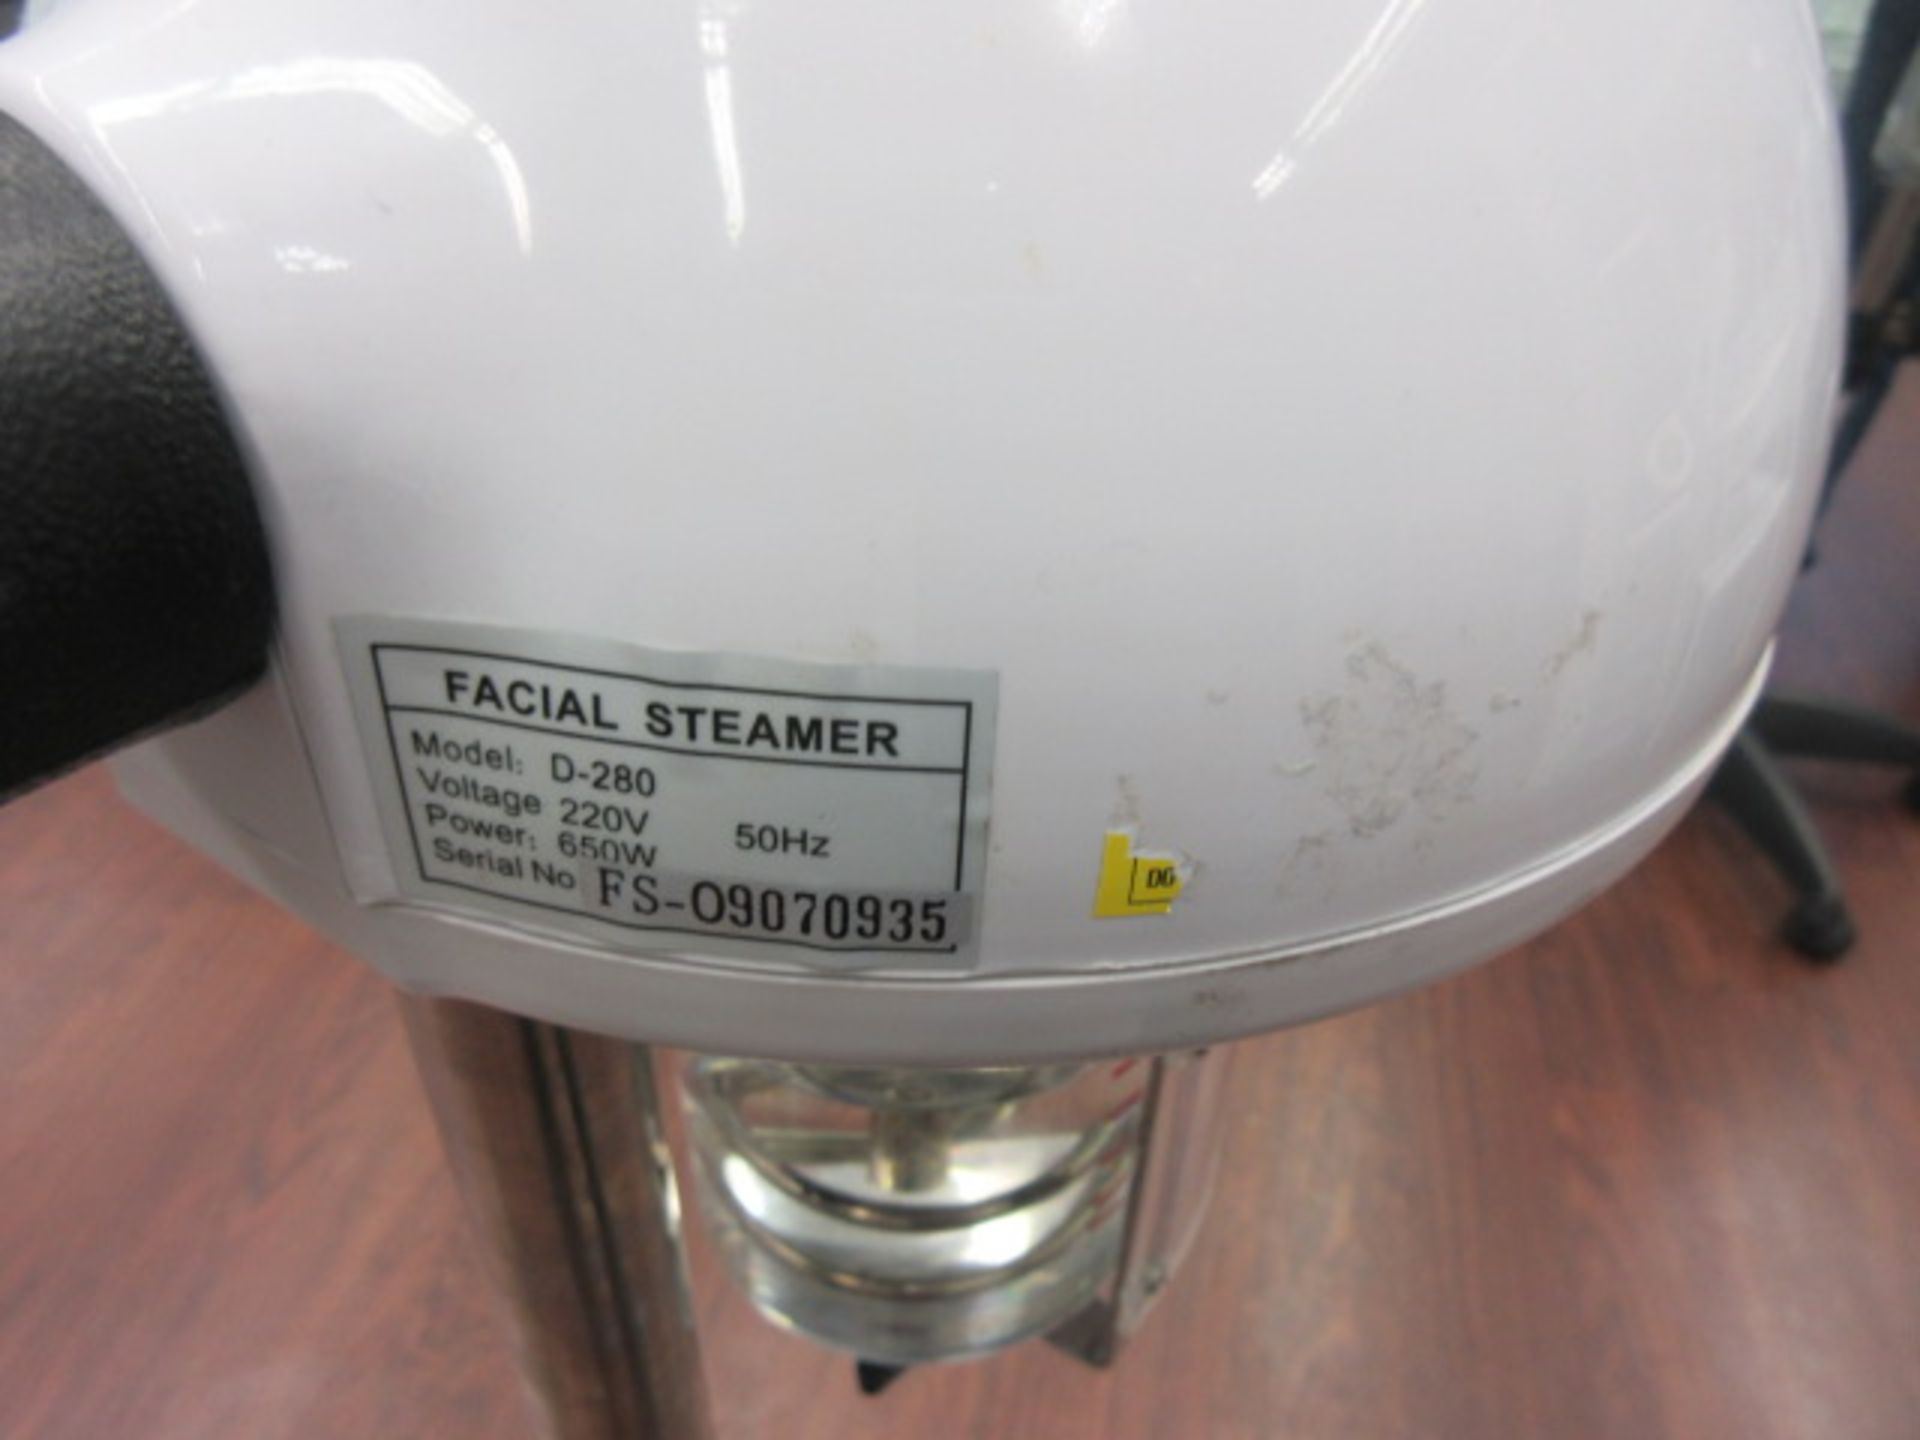 Facial Steamer. Model D-280. S/n FS-09070935 Holehouse Road. Beauty Salon Y10 2 Snd Floor - Image 3 of 3